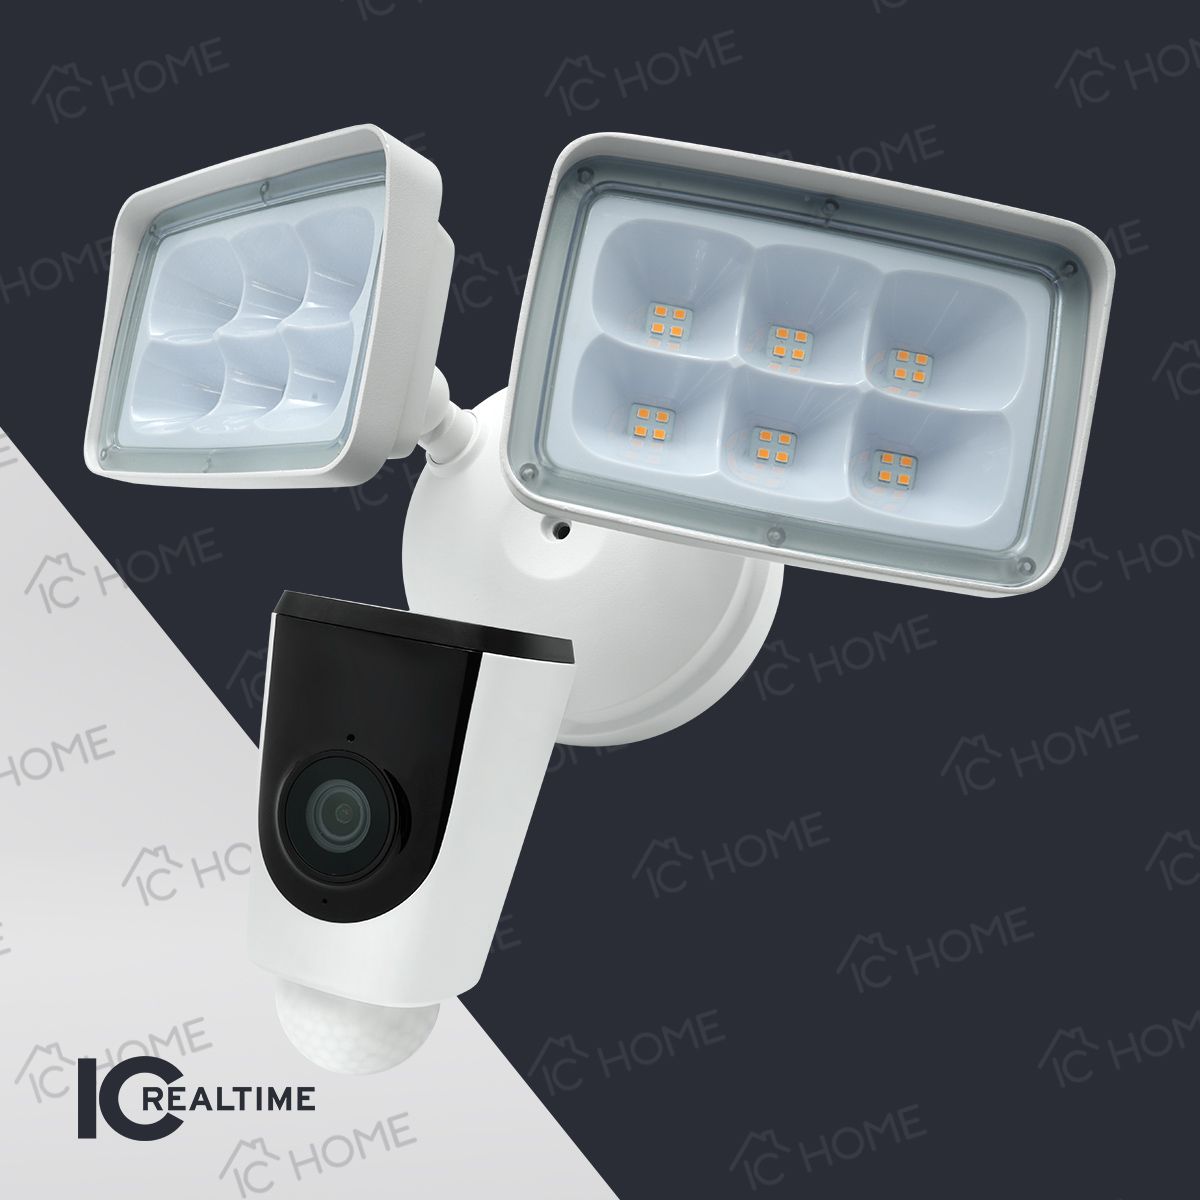 IC Realtime wireless home surveillance cameras